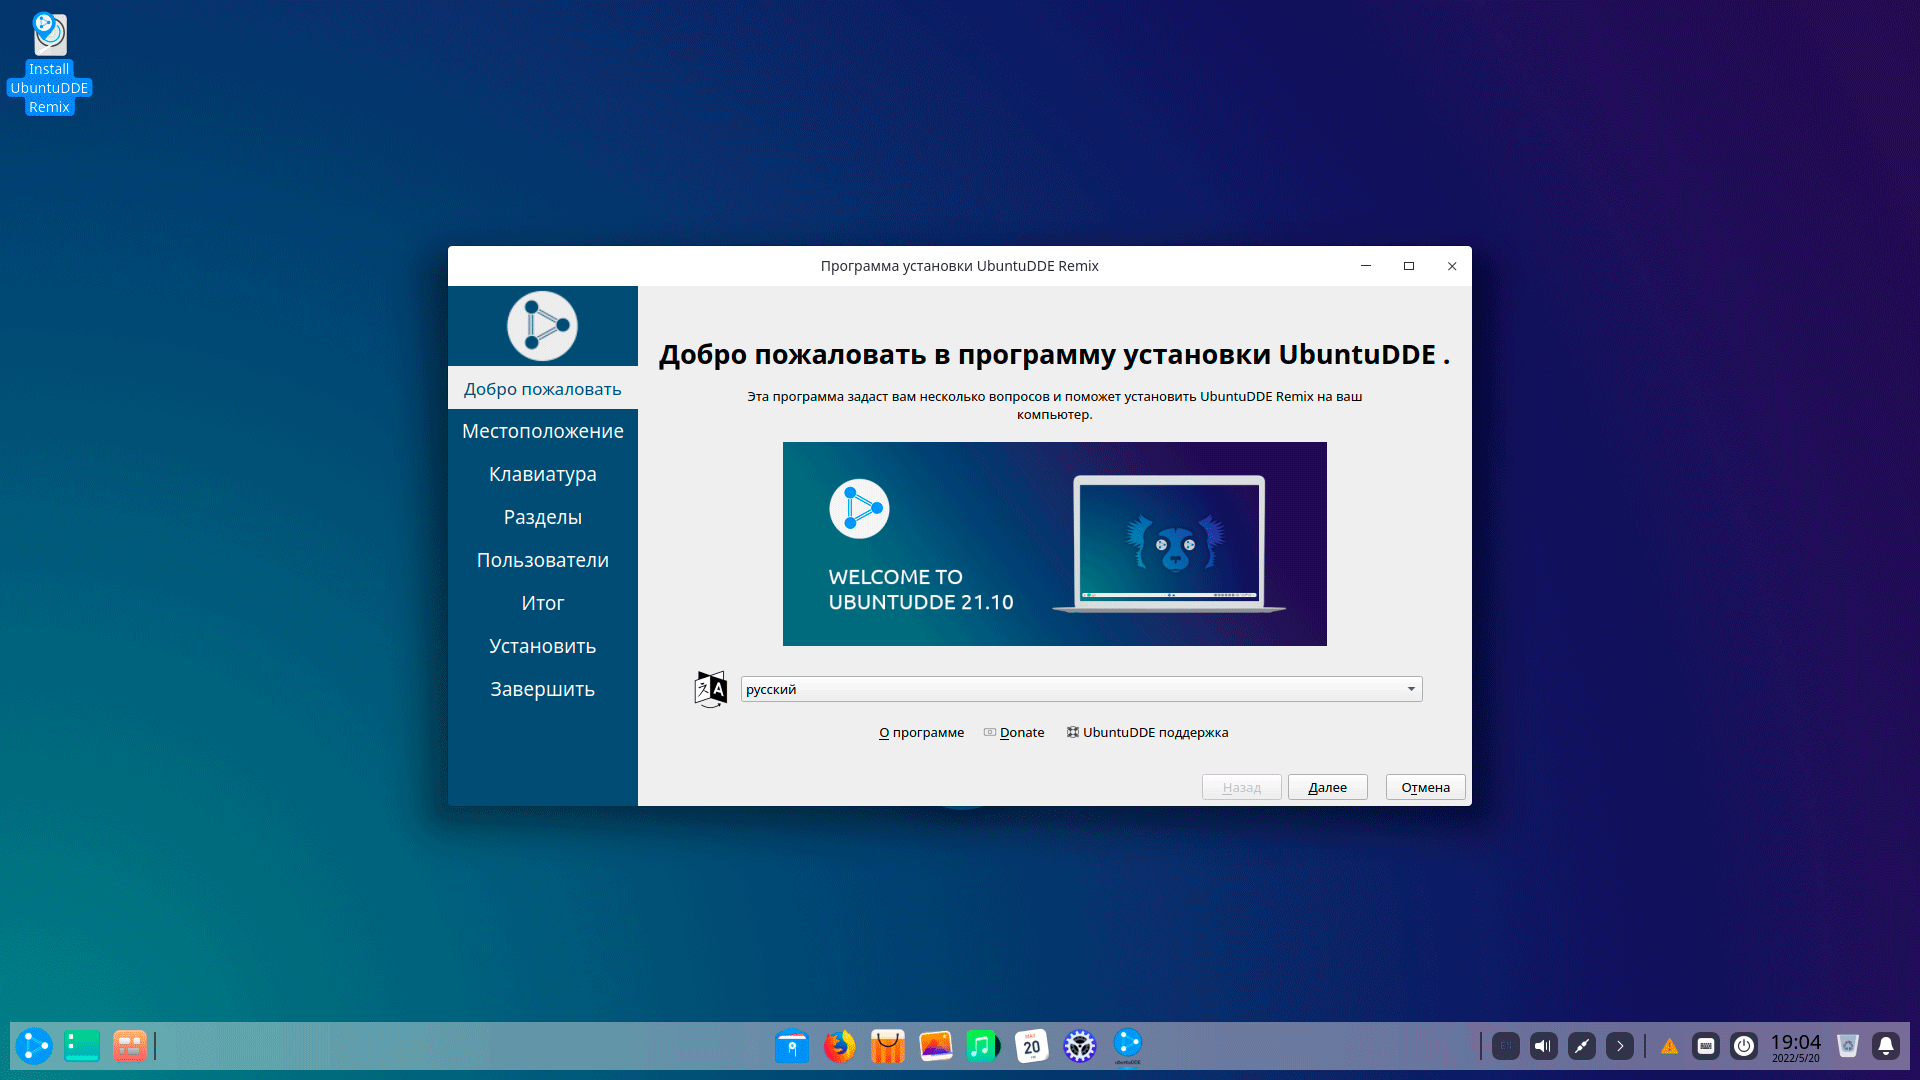 https://interface31.ru/tech_it/images/UbuntuDDE-review-001.png